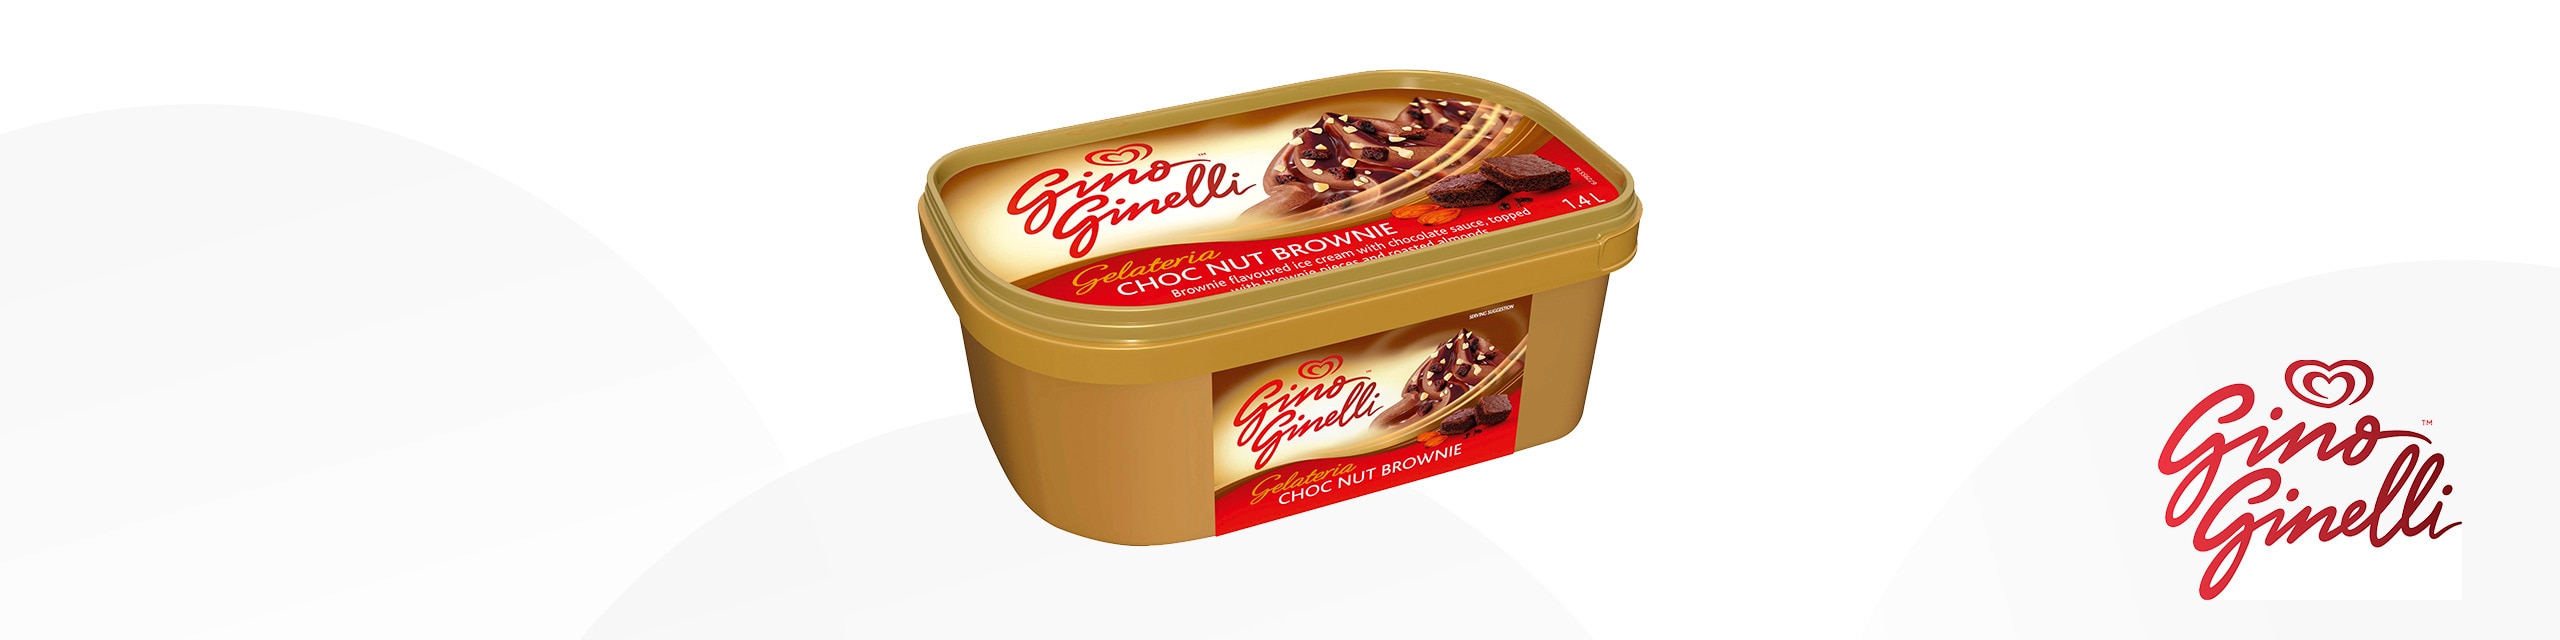 Gino Ginelli Choc Nut Brownie Tub